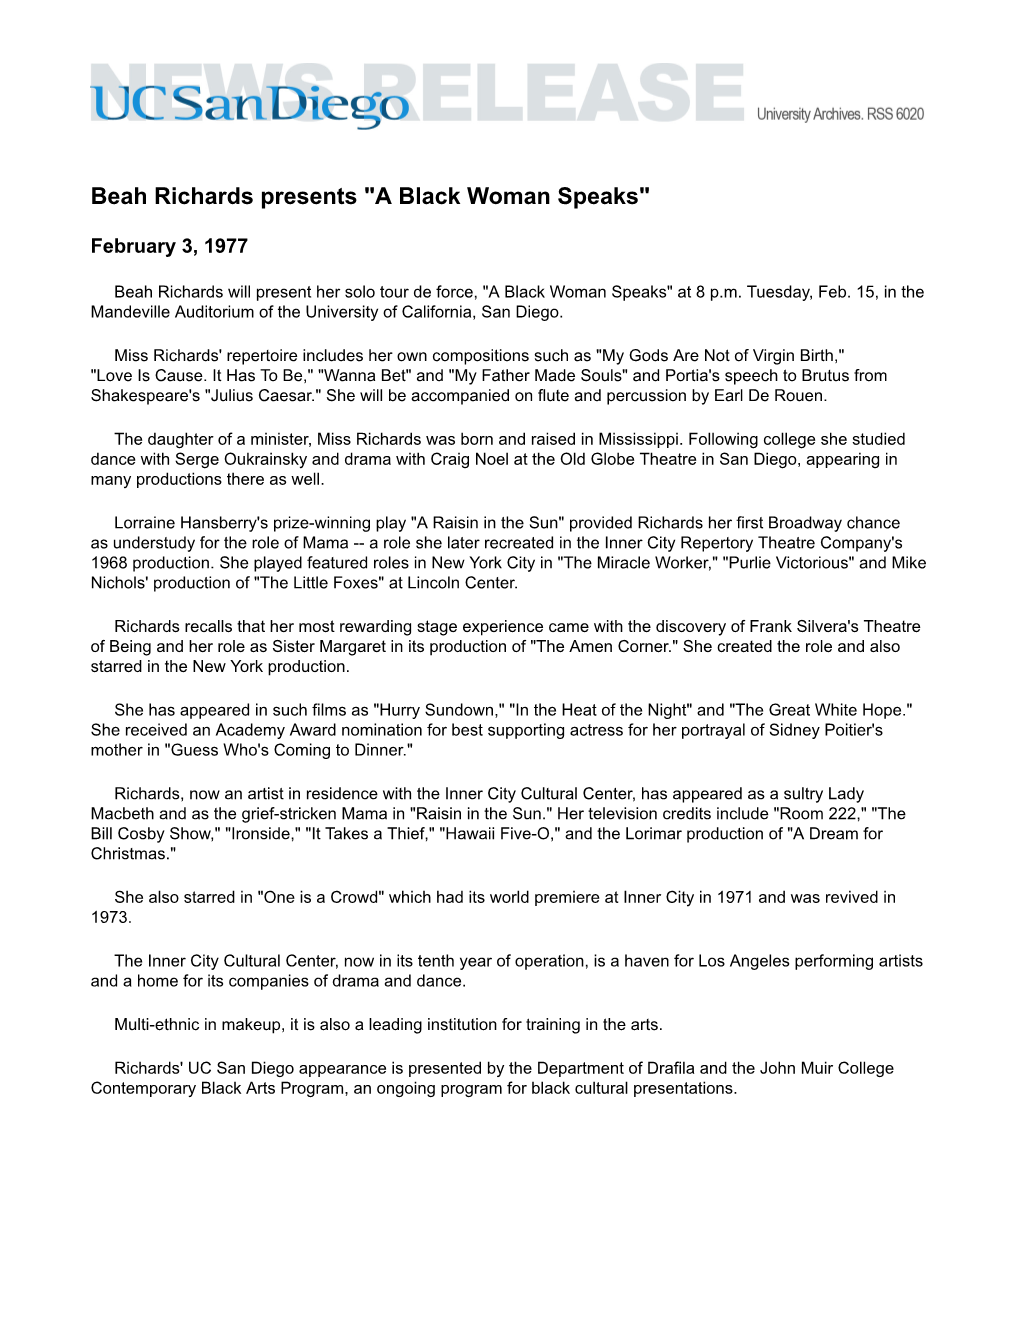 Beah Richards Presents "A Black Woman Speaks"